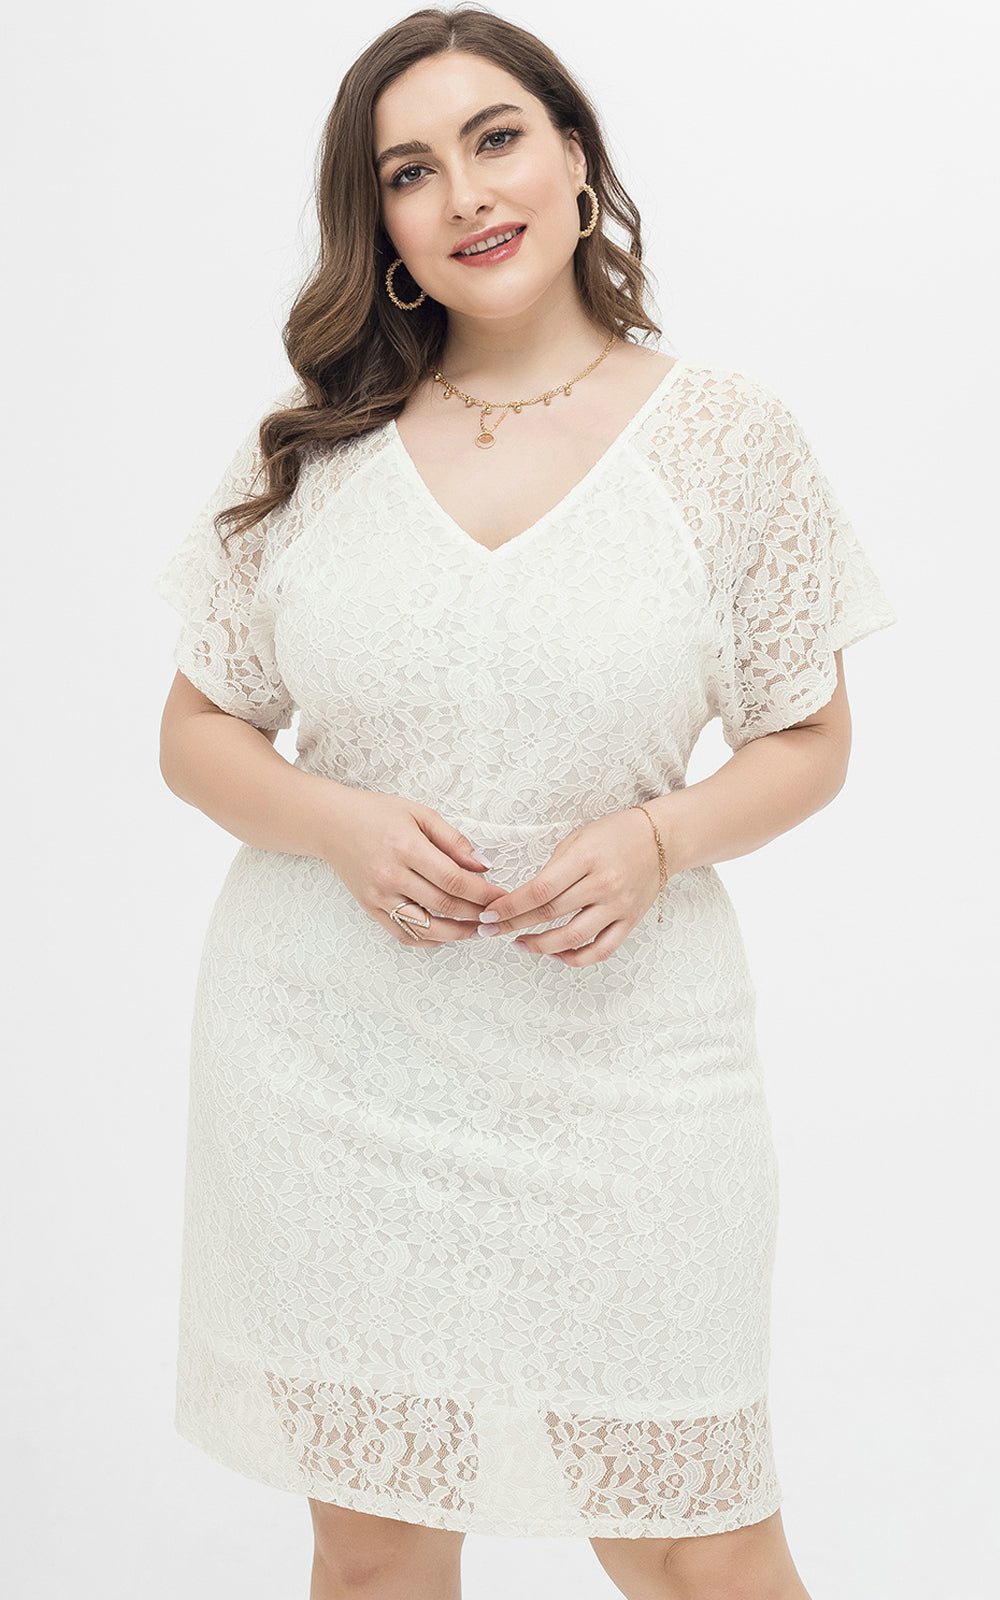 Women White Floral Lace Plus Size Midi Cocktail Dresses for Wedding Guest Engagement